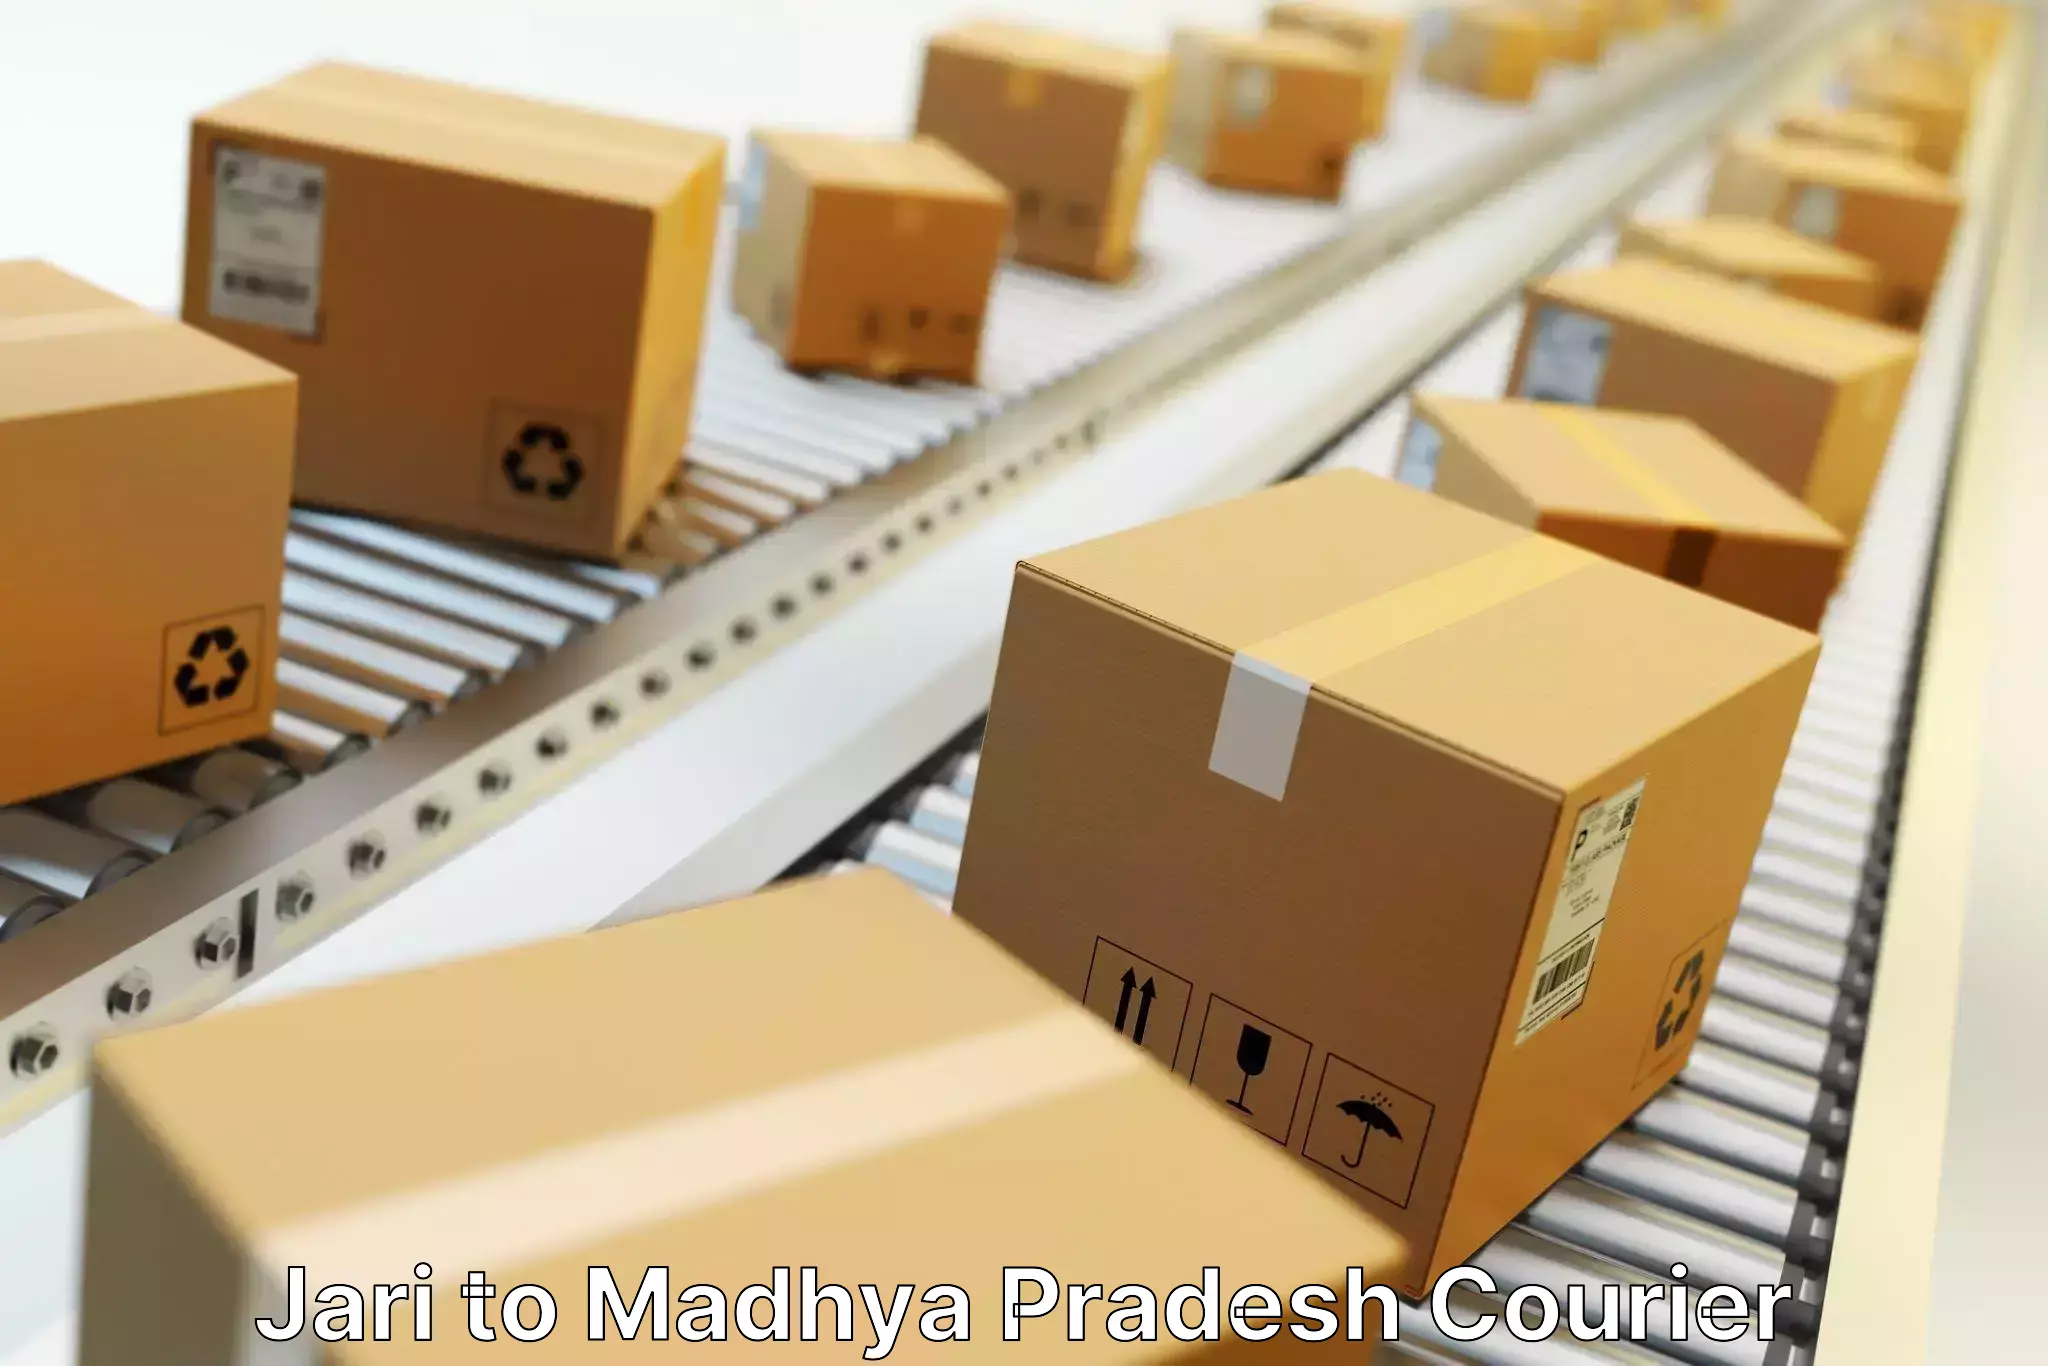 Courier service efficiency Jari to Madhya Pradesh